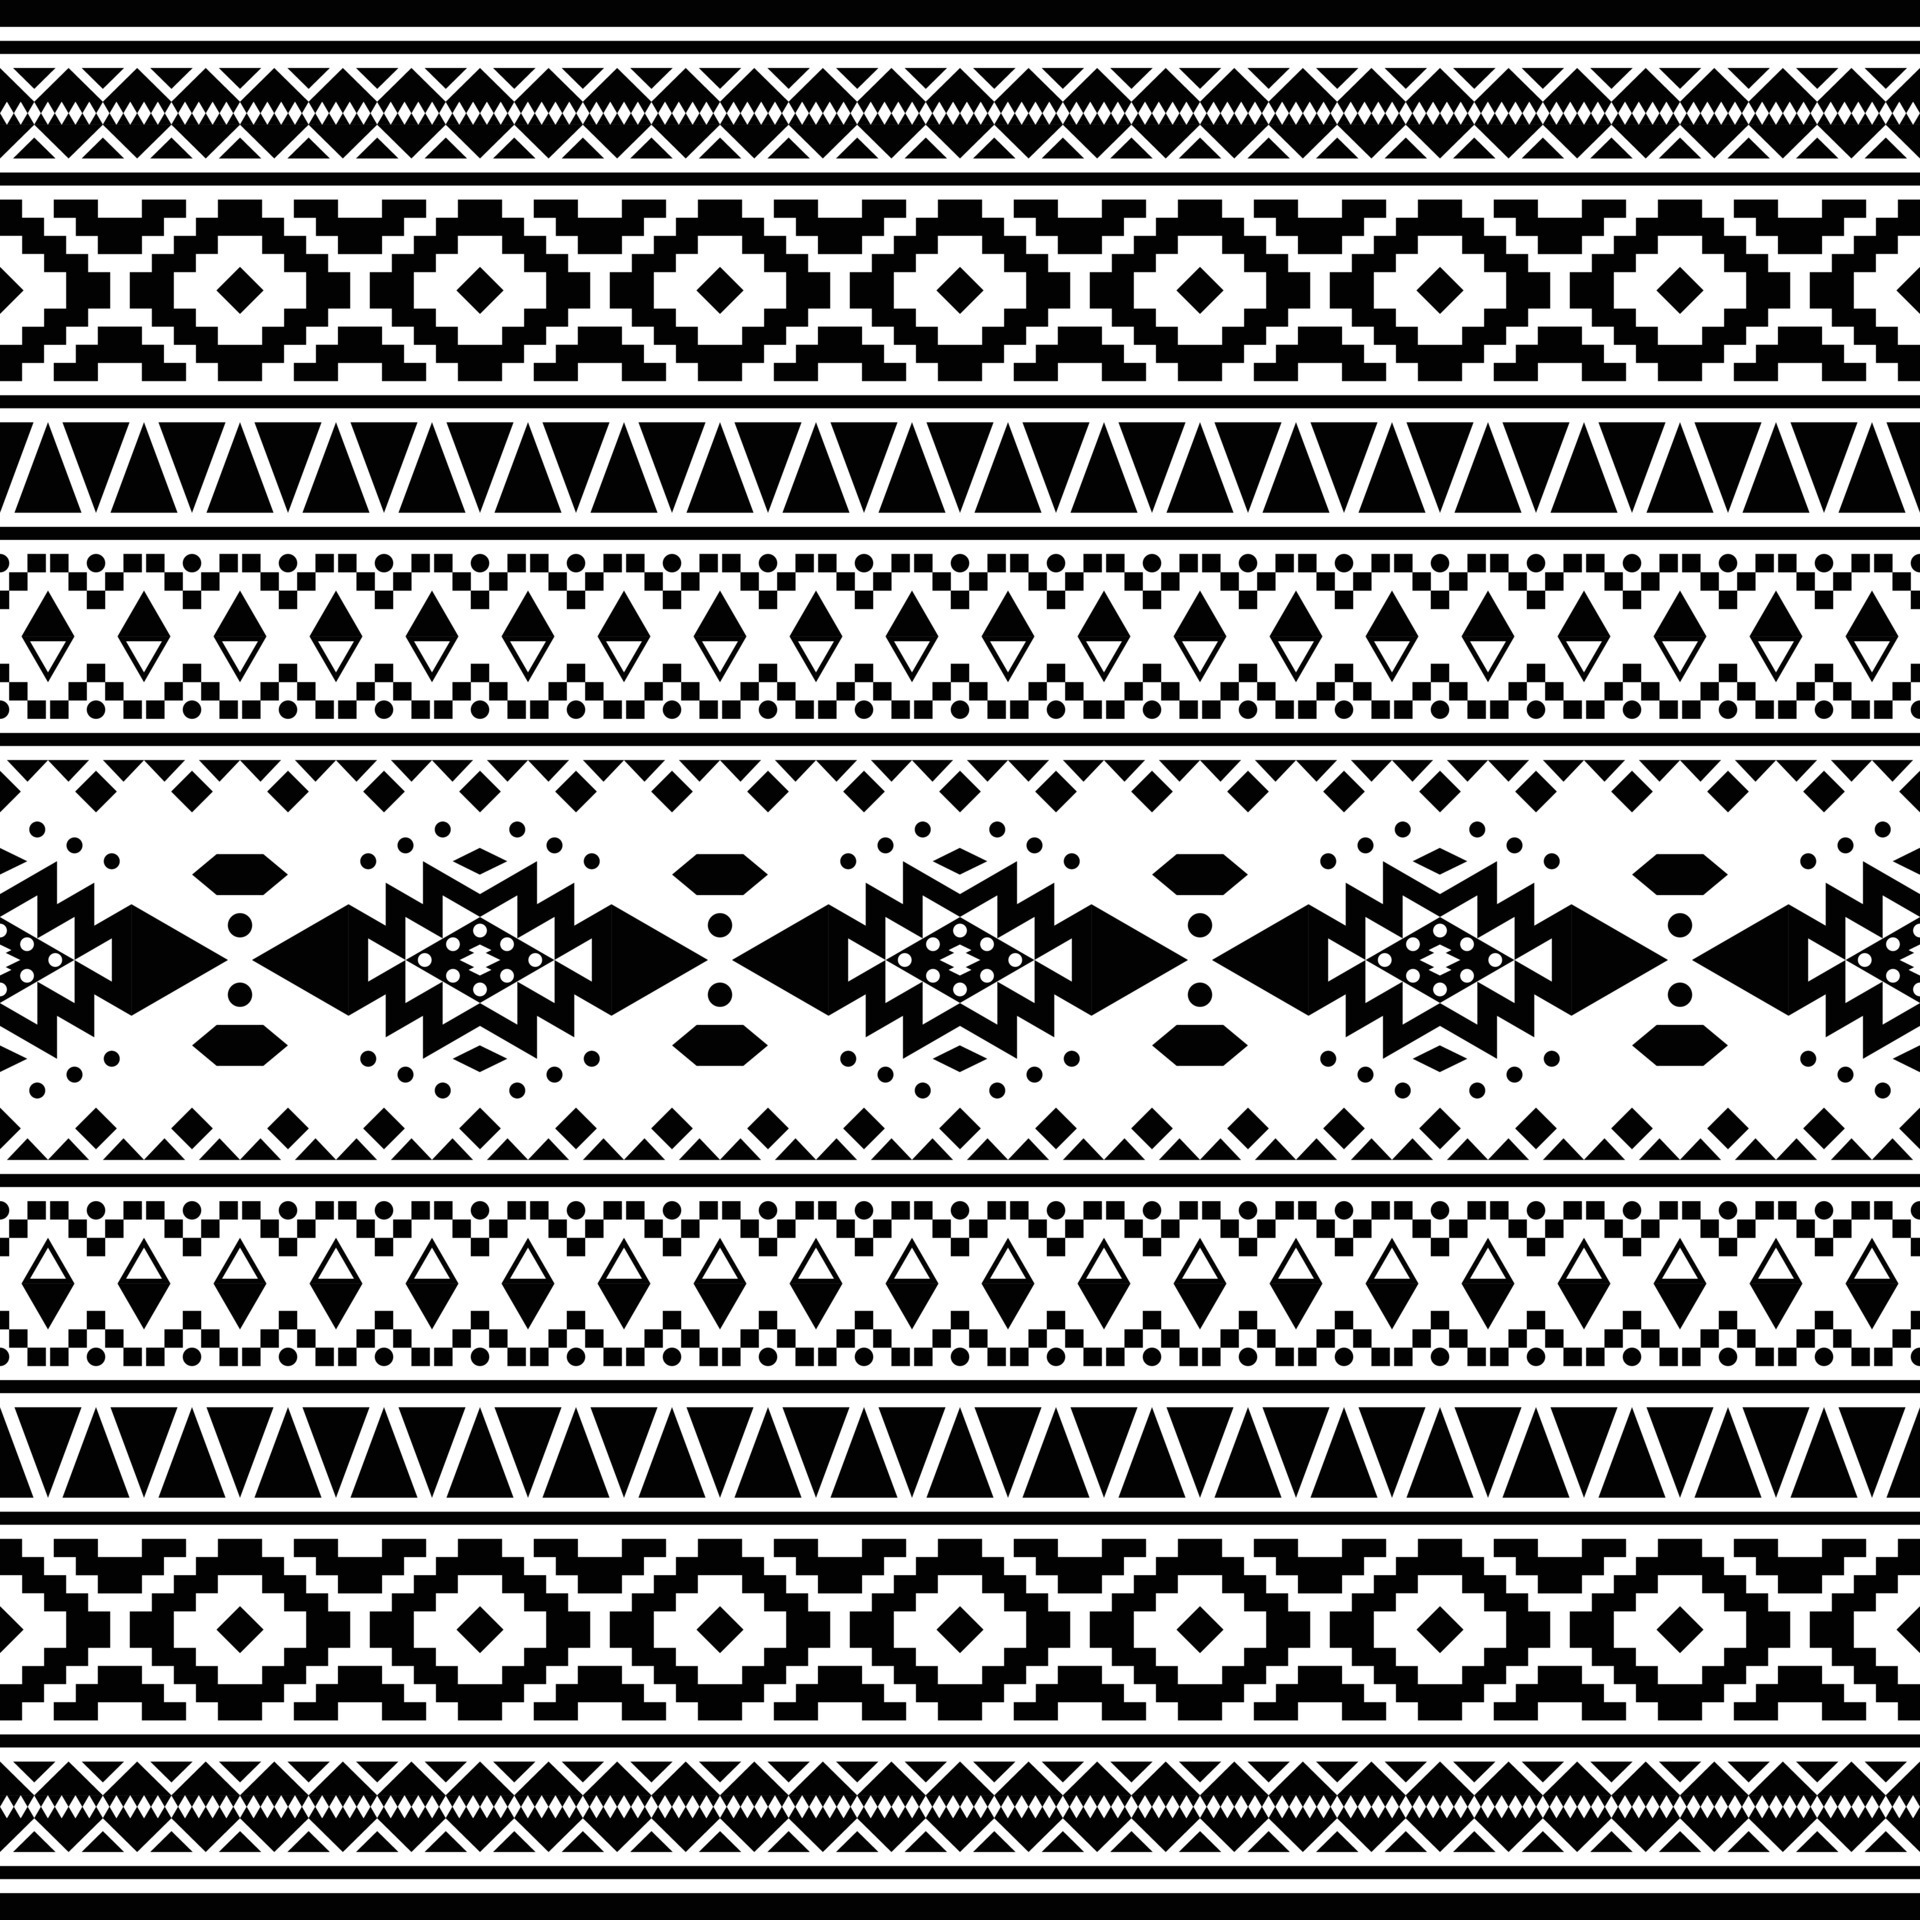 Ethnic geometric Native American pattern design in black and white ...